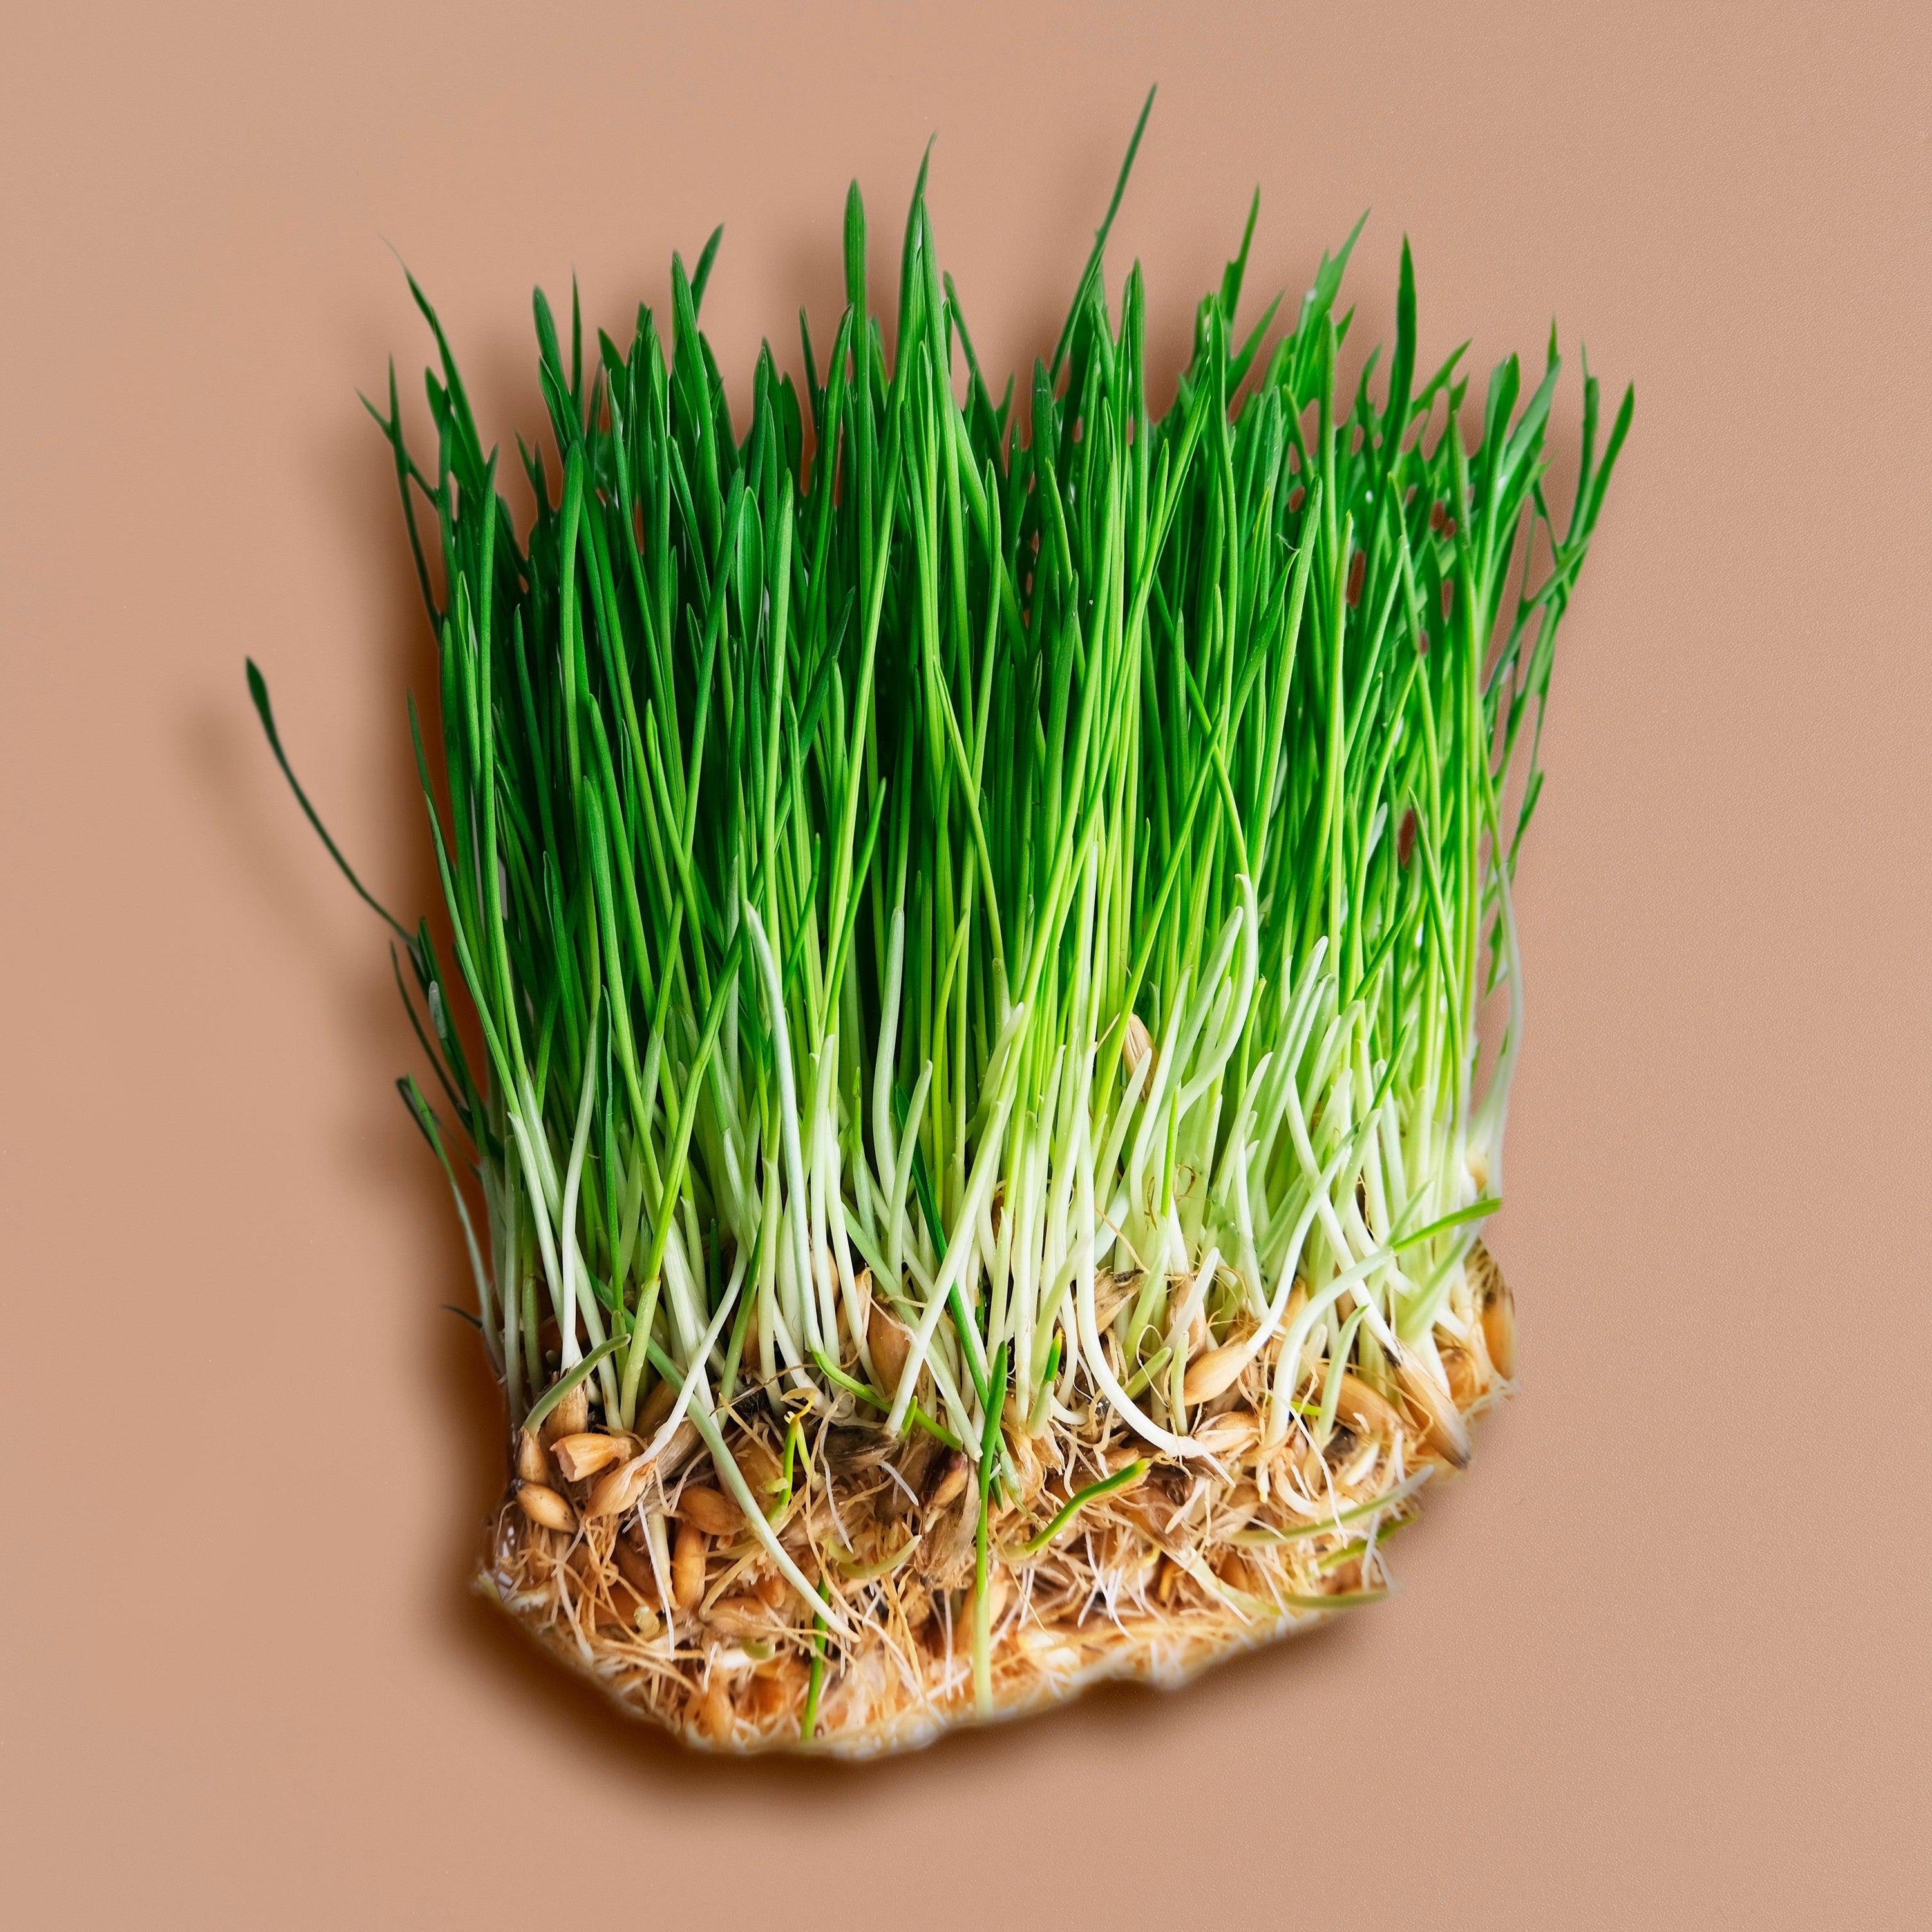 Young Barley Grass